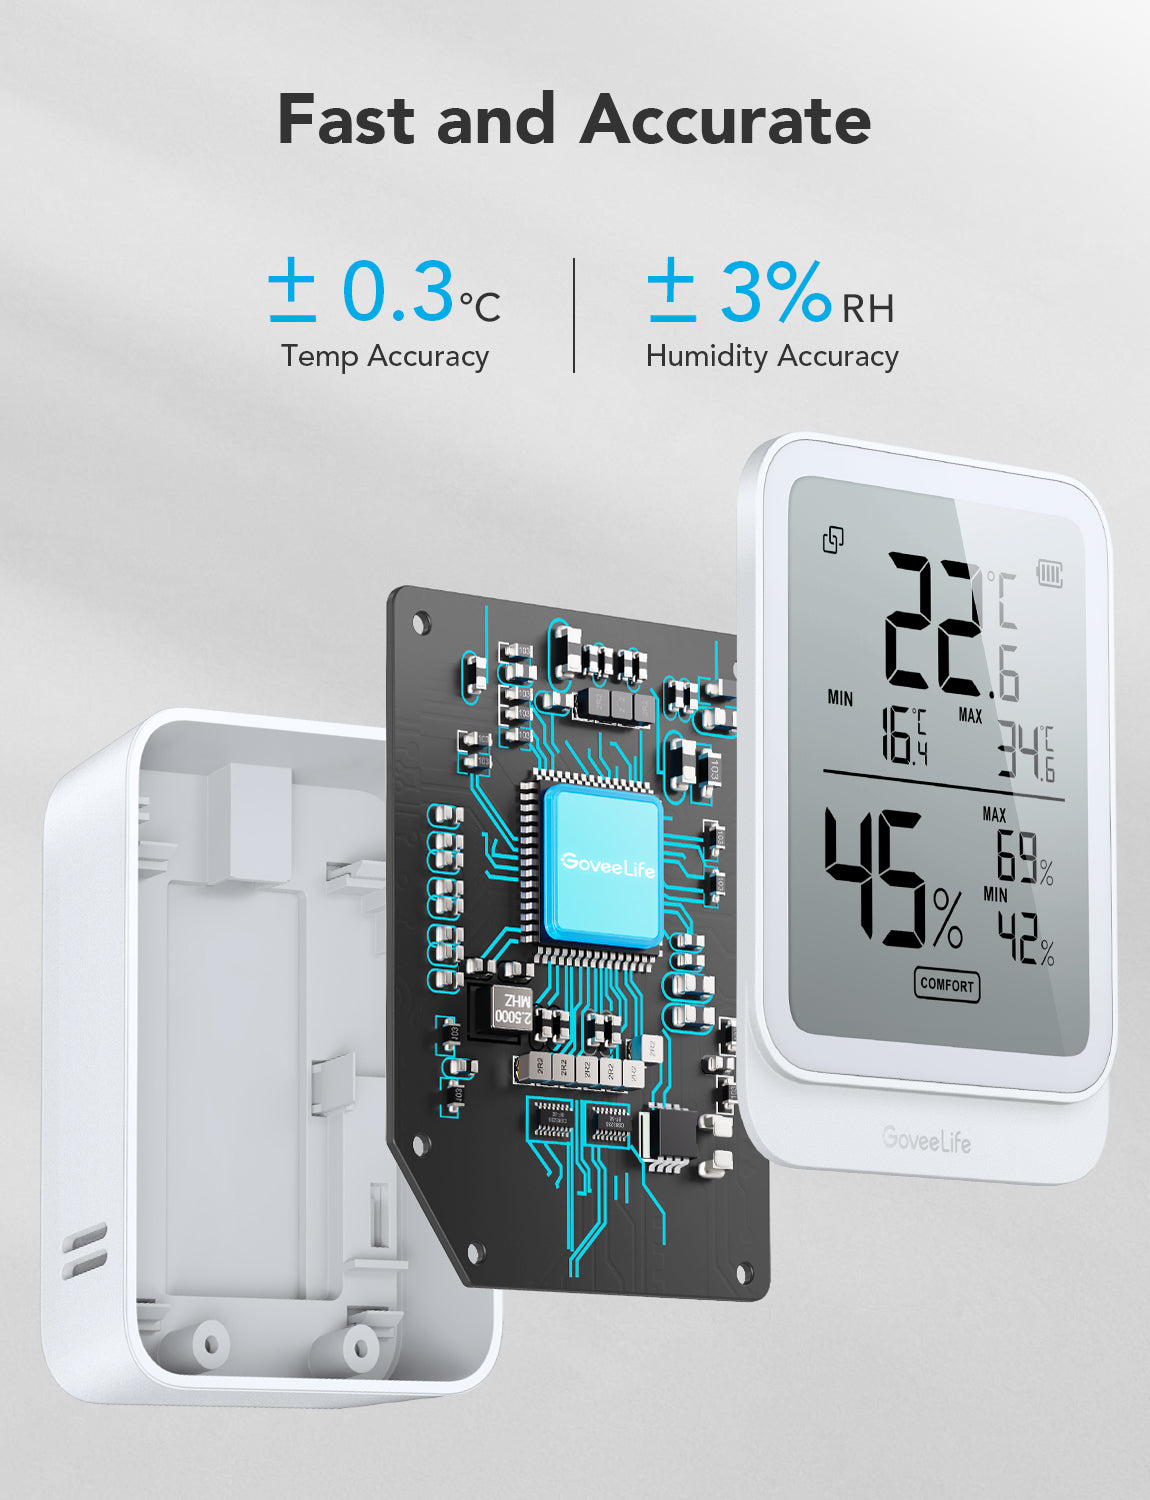 Refurbished Bluetooth Hygrometer Thermometer-White